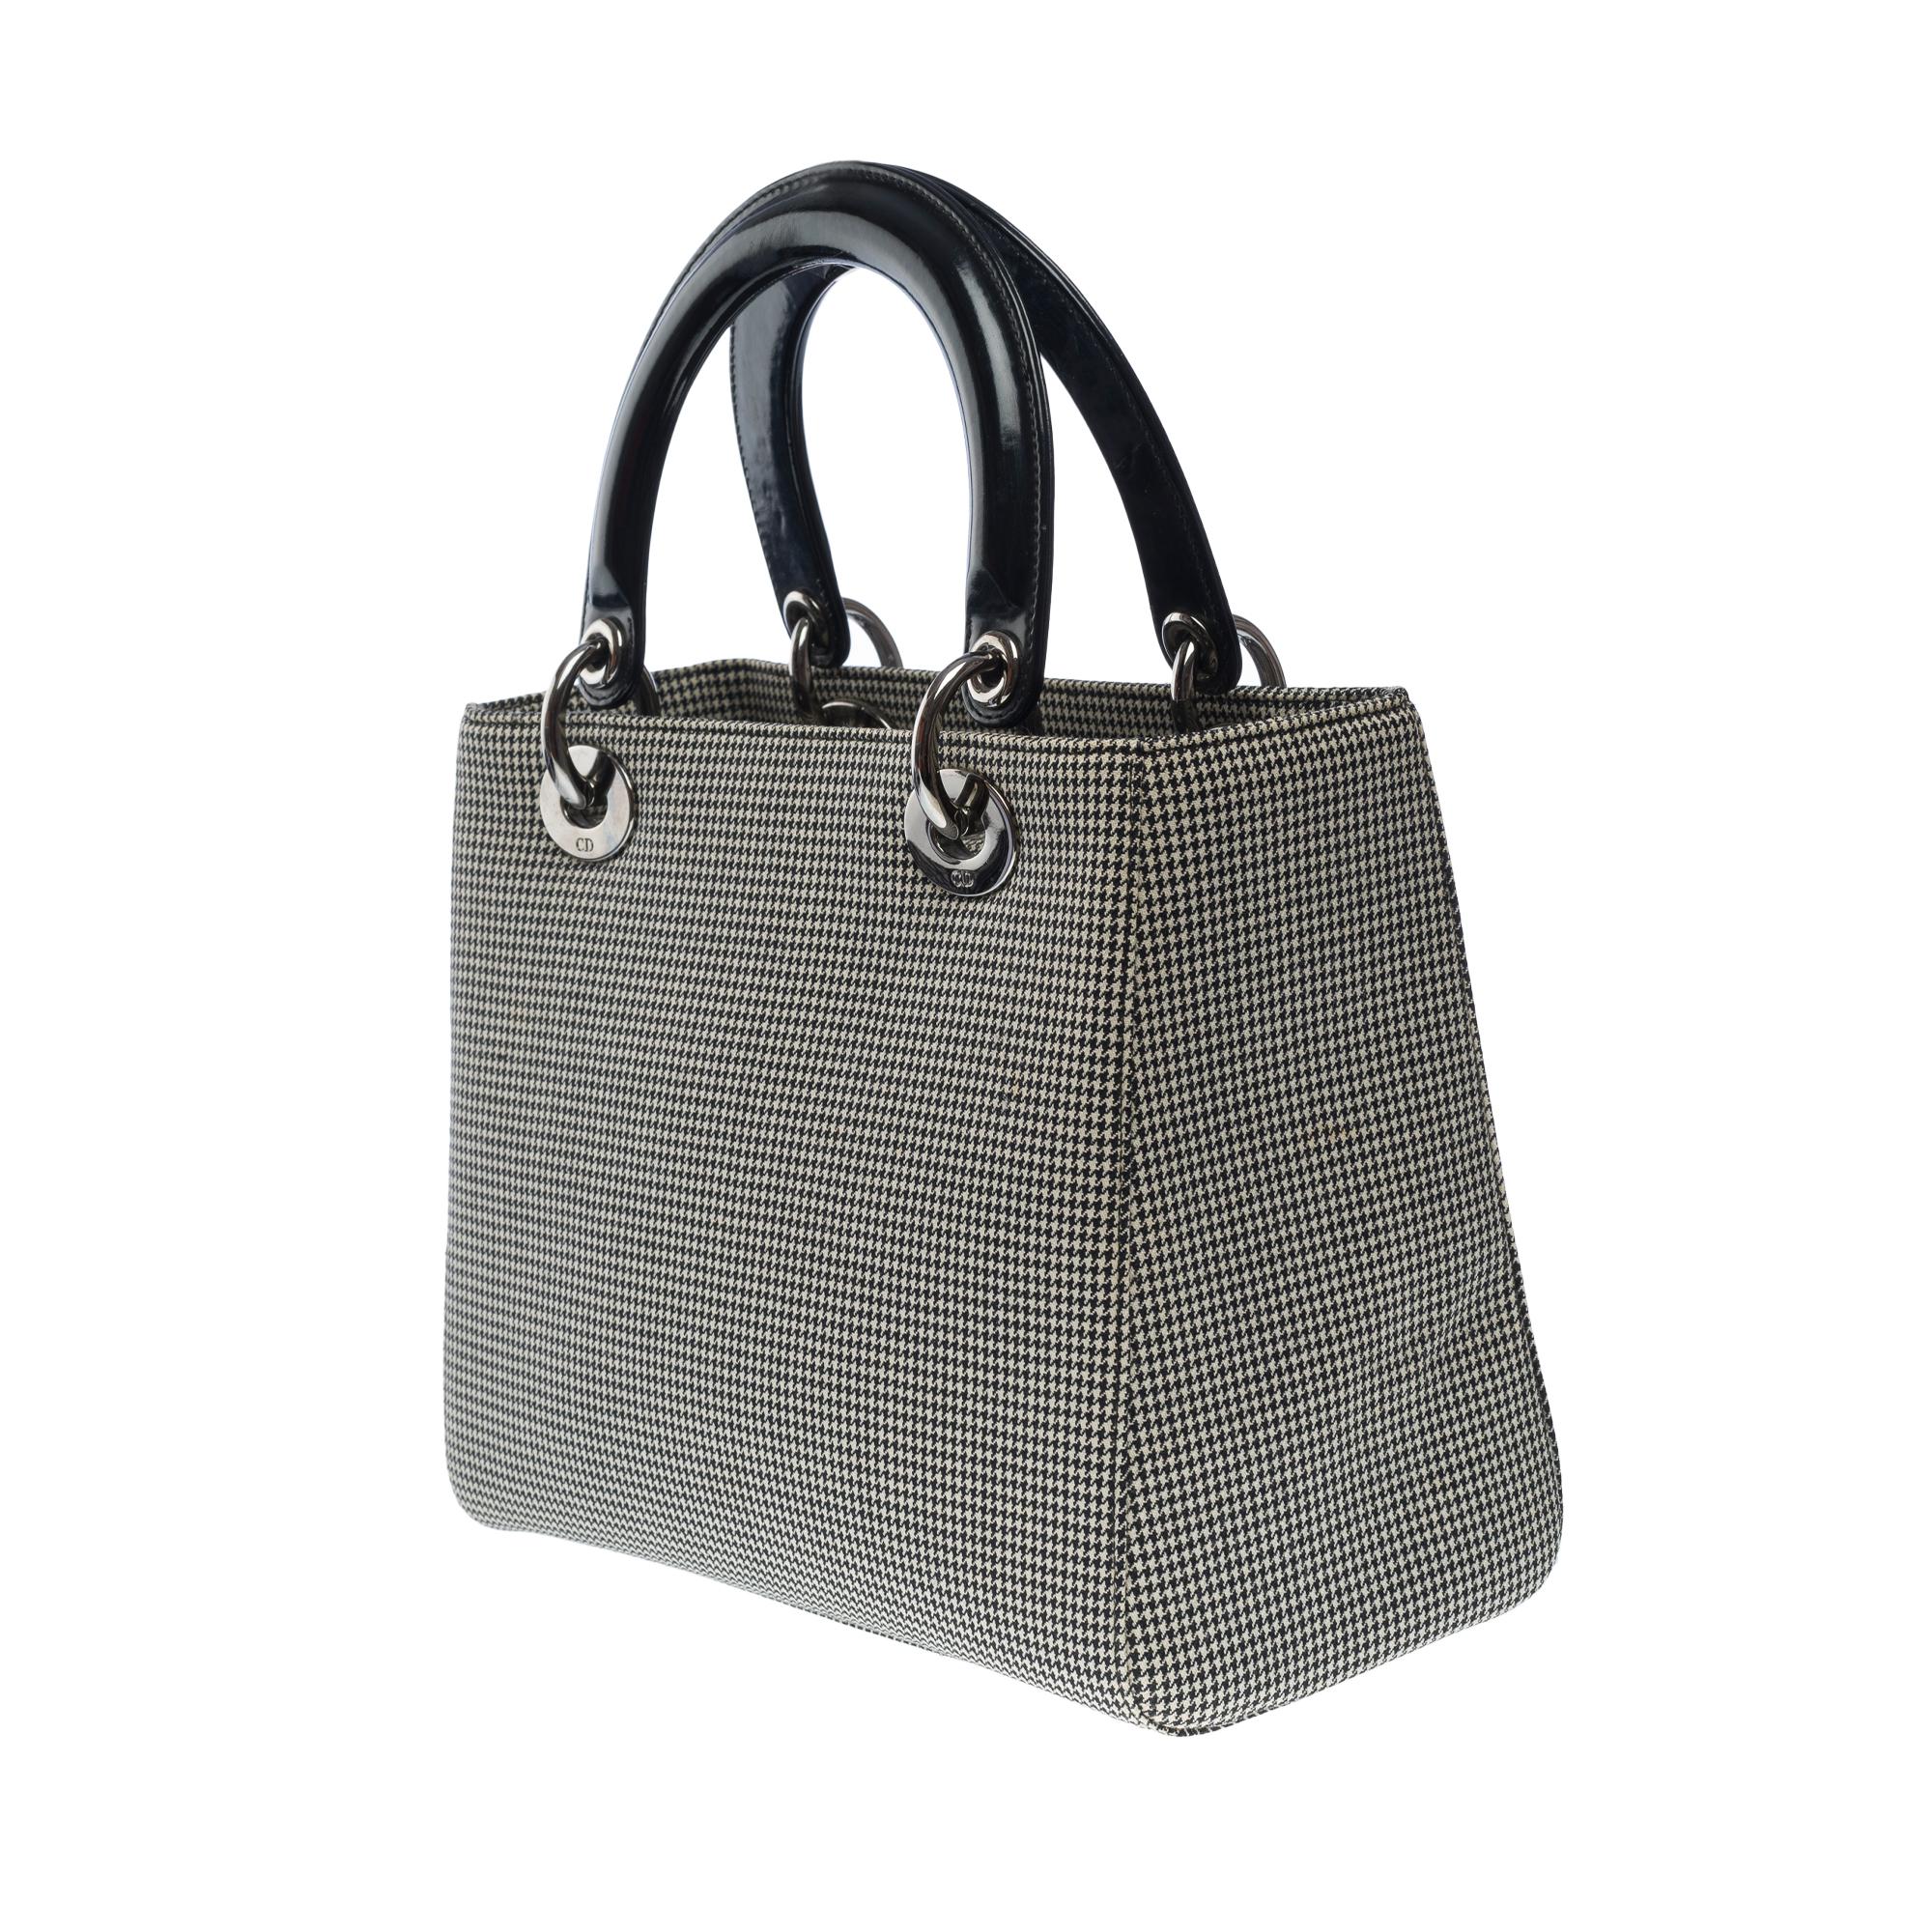 Beautiful Lady Dior MM handbag strap in Pied-de poule canvas, BSHW 1